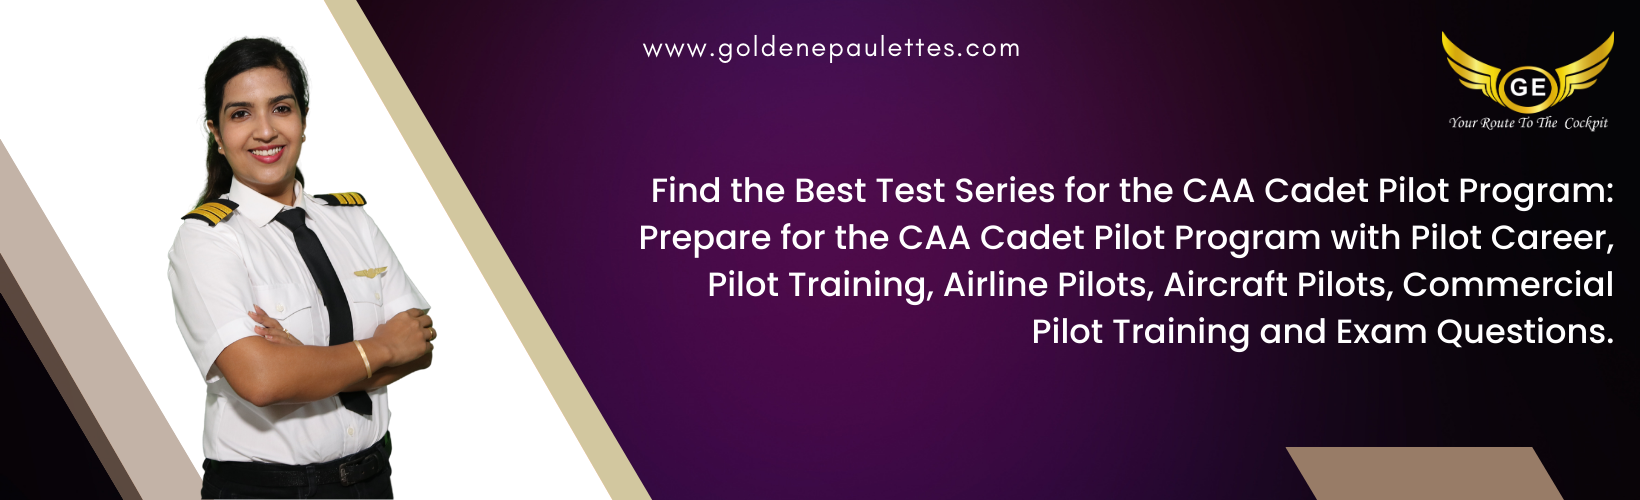 Test Series for the CAA Cadet Pilot Program